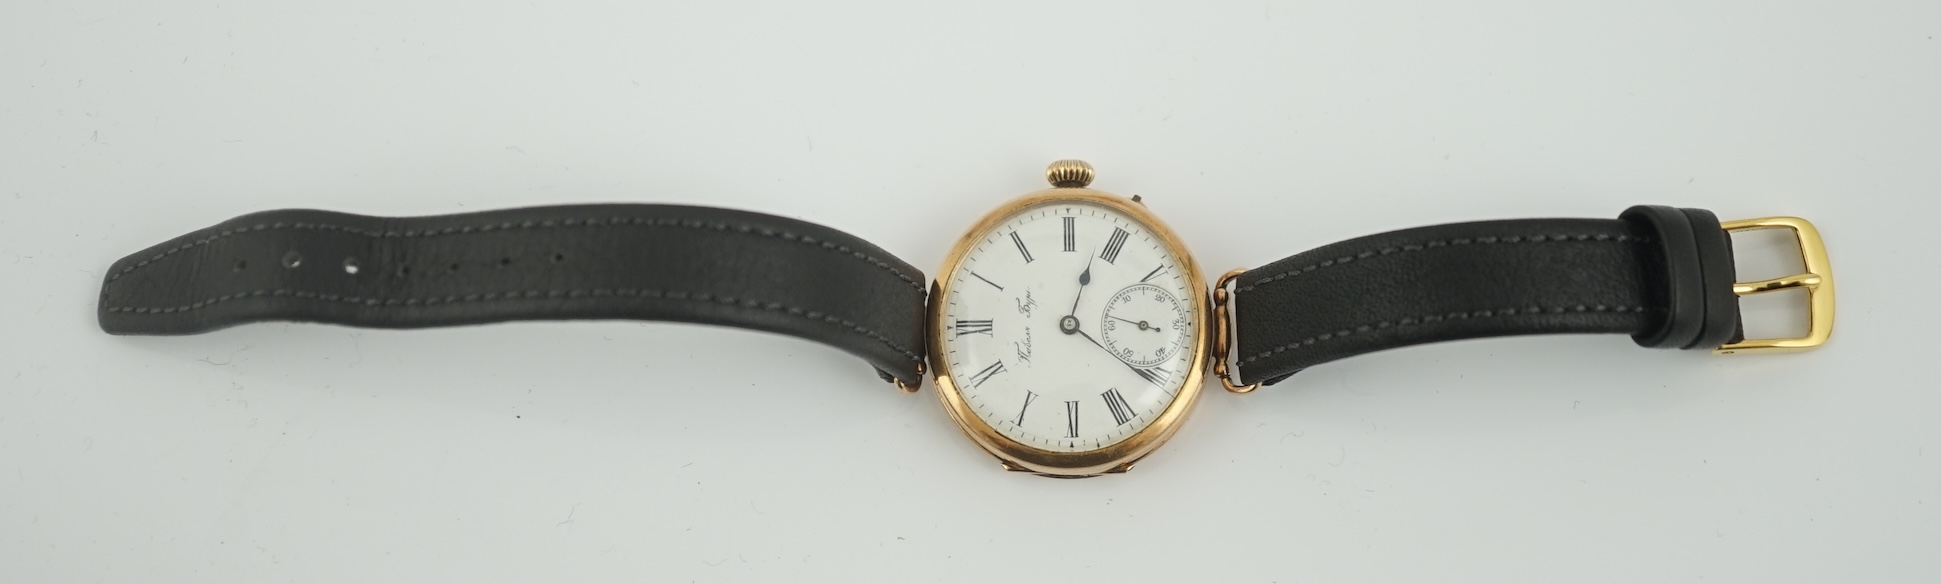 A Russian 56 zolotnik gold manual wind wrist watch by Pavel Bure